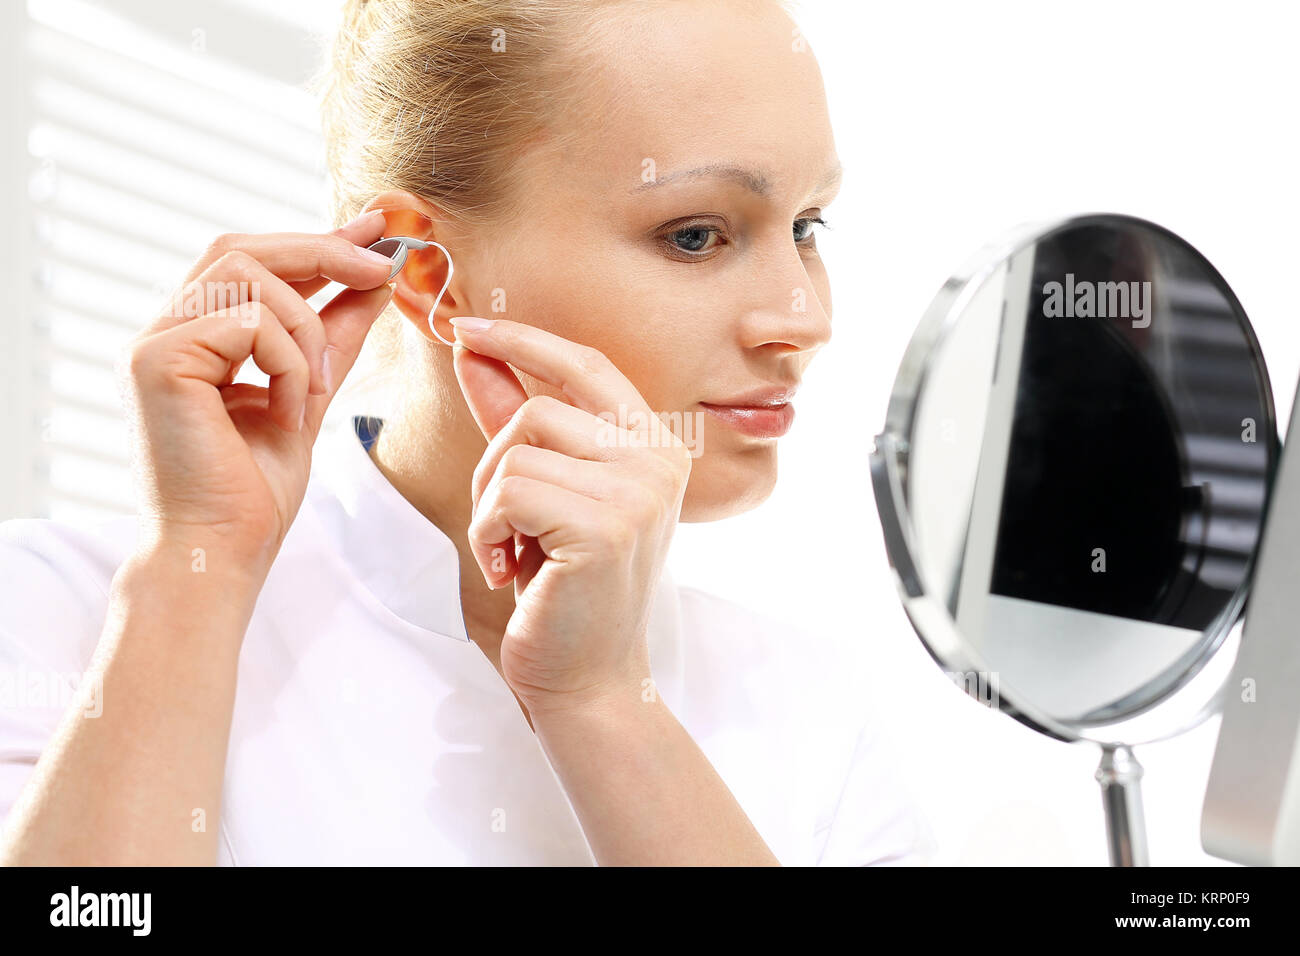 hearing loss. hearing. hearing aid. Stock Photo